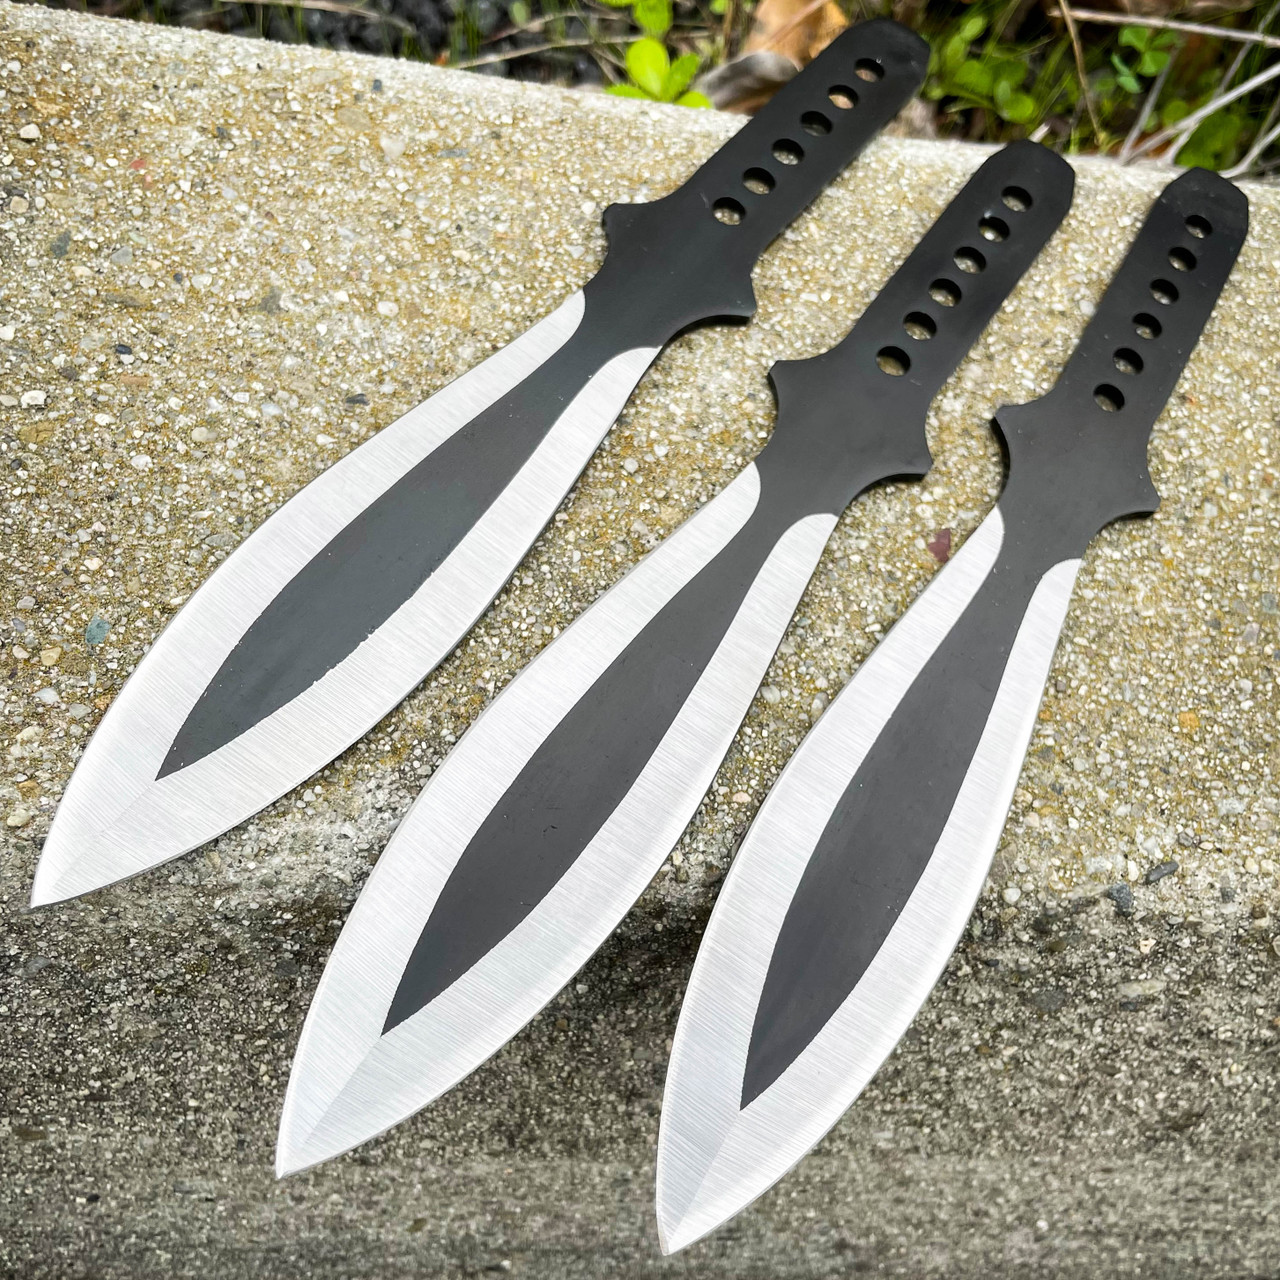  9 1/2  Metal Ninja Kunai Throwing knife : Sports & Outdoors